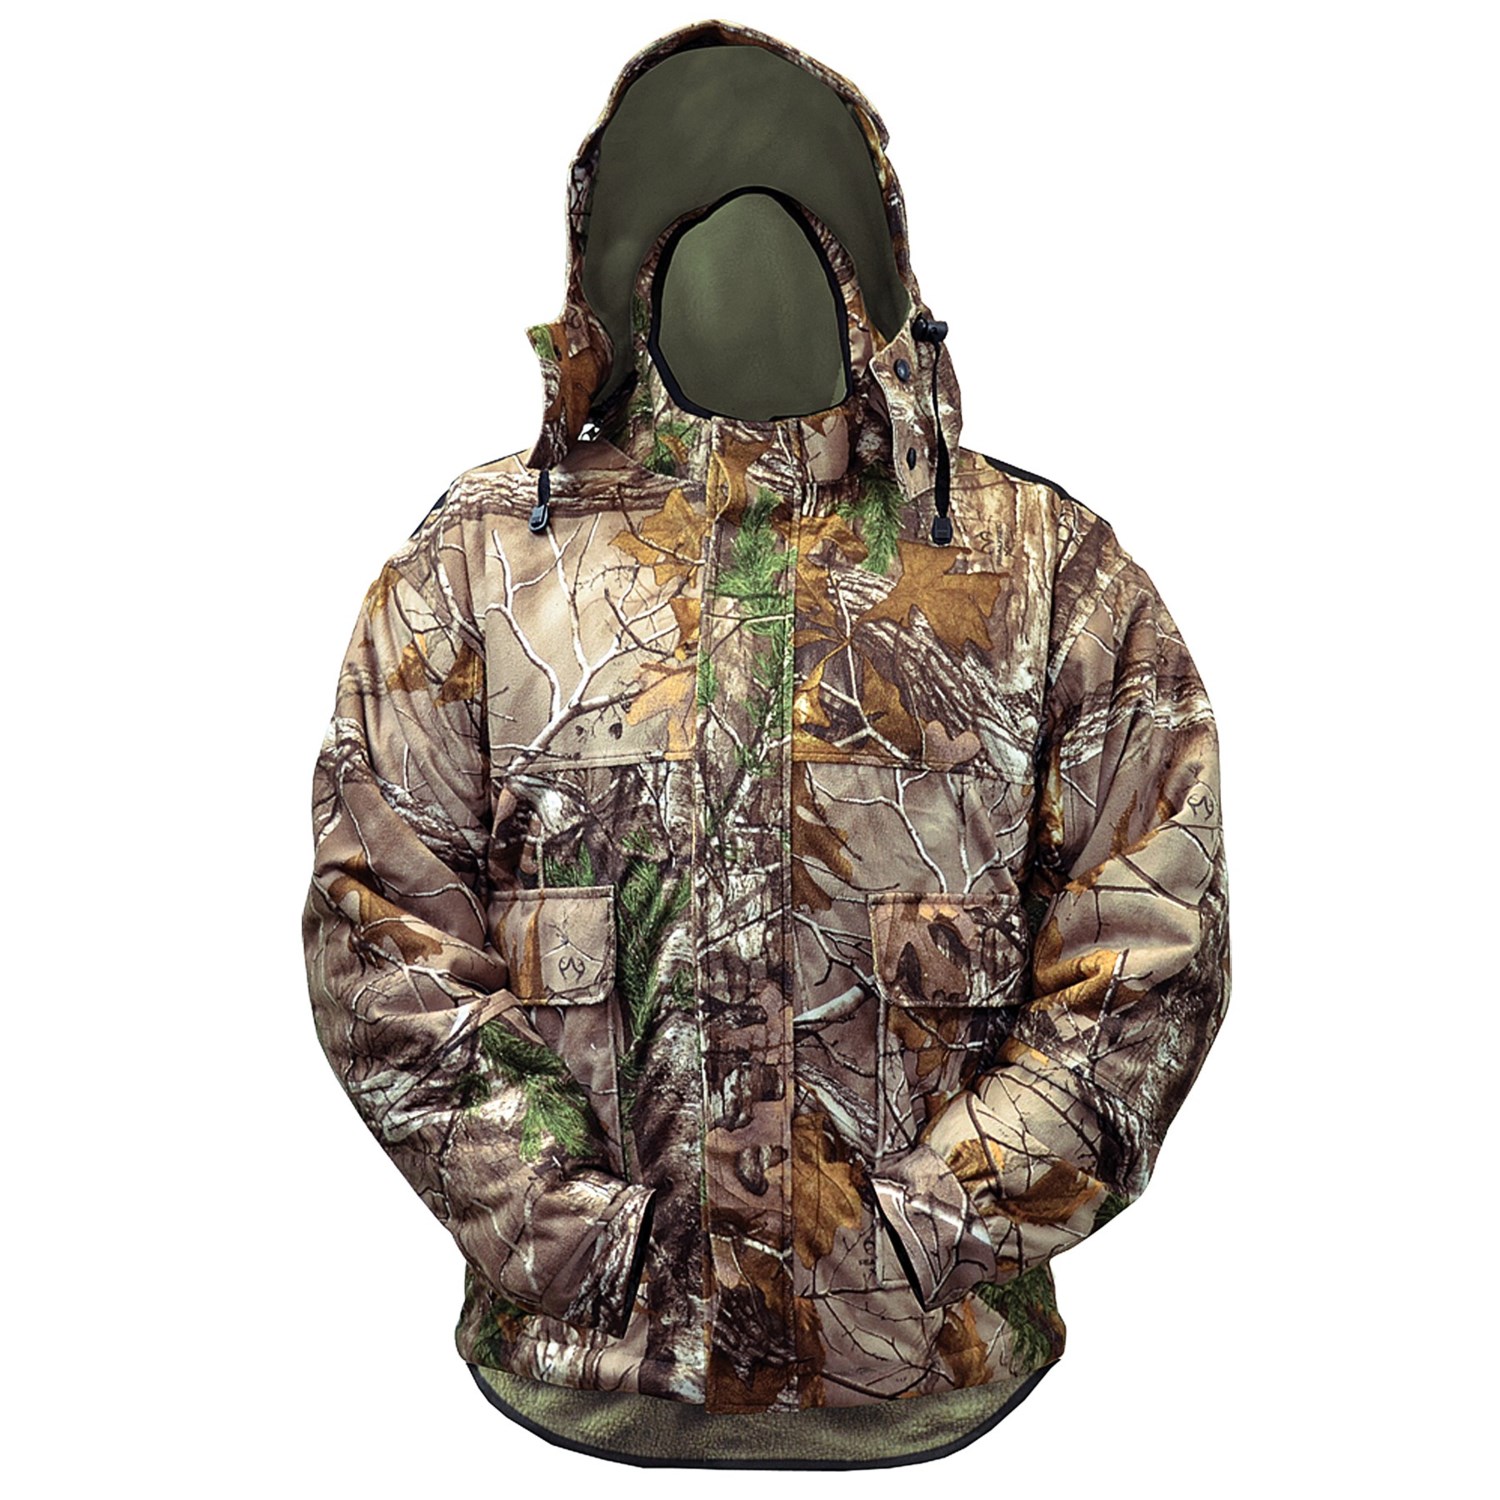 Rivers West Ambush Heavyweight Fleece Jacket (For Men) 7650G - Save 35%